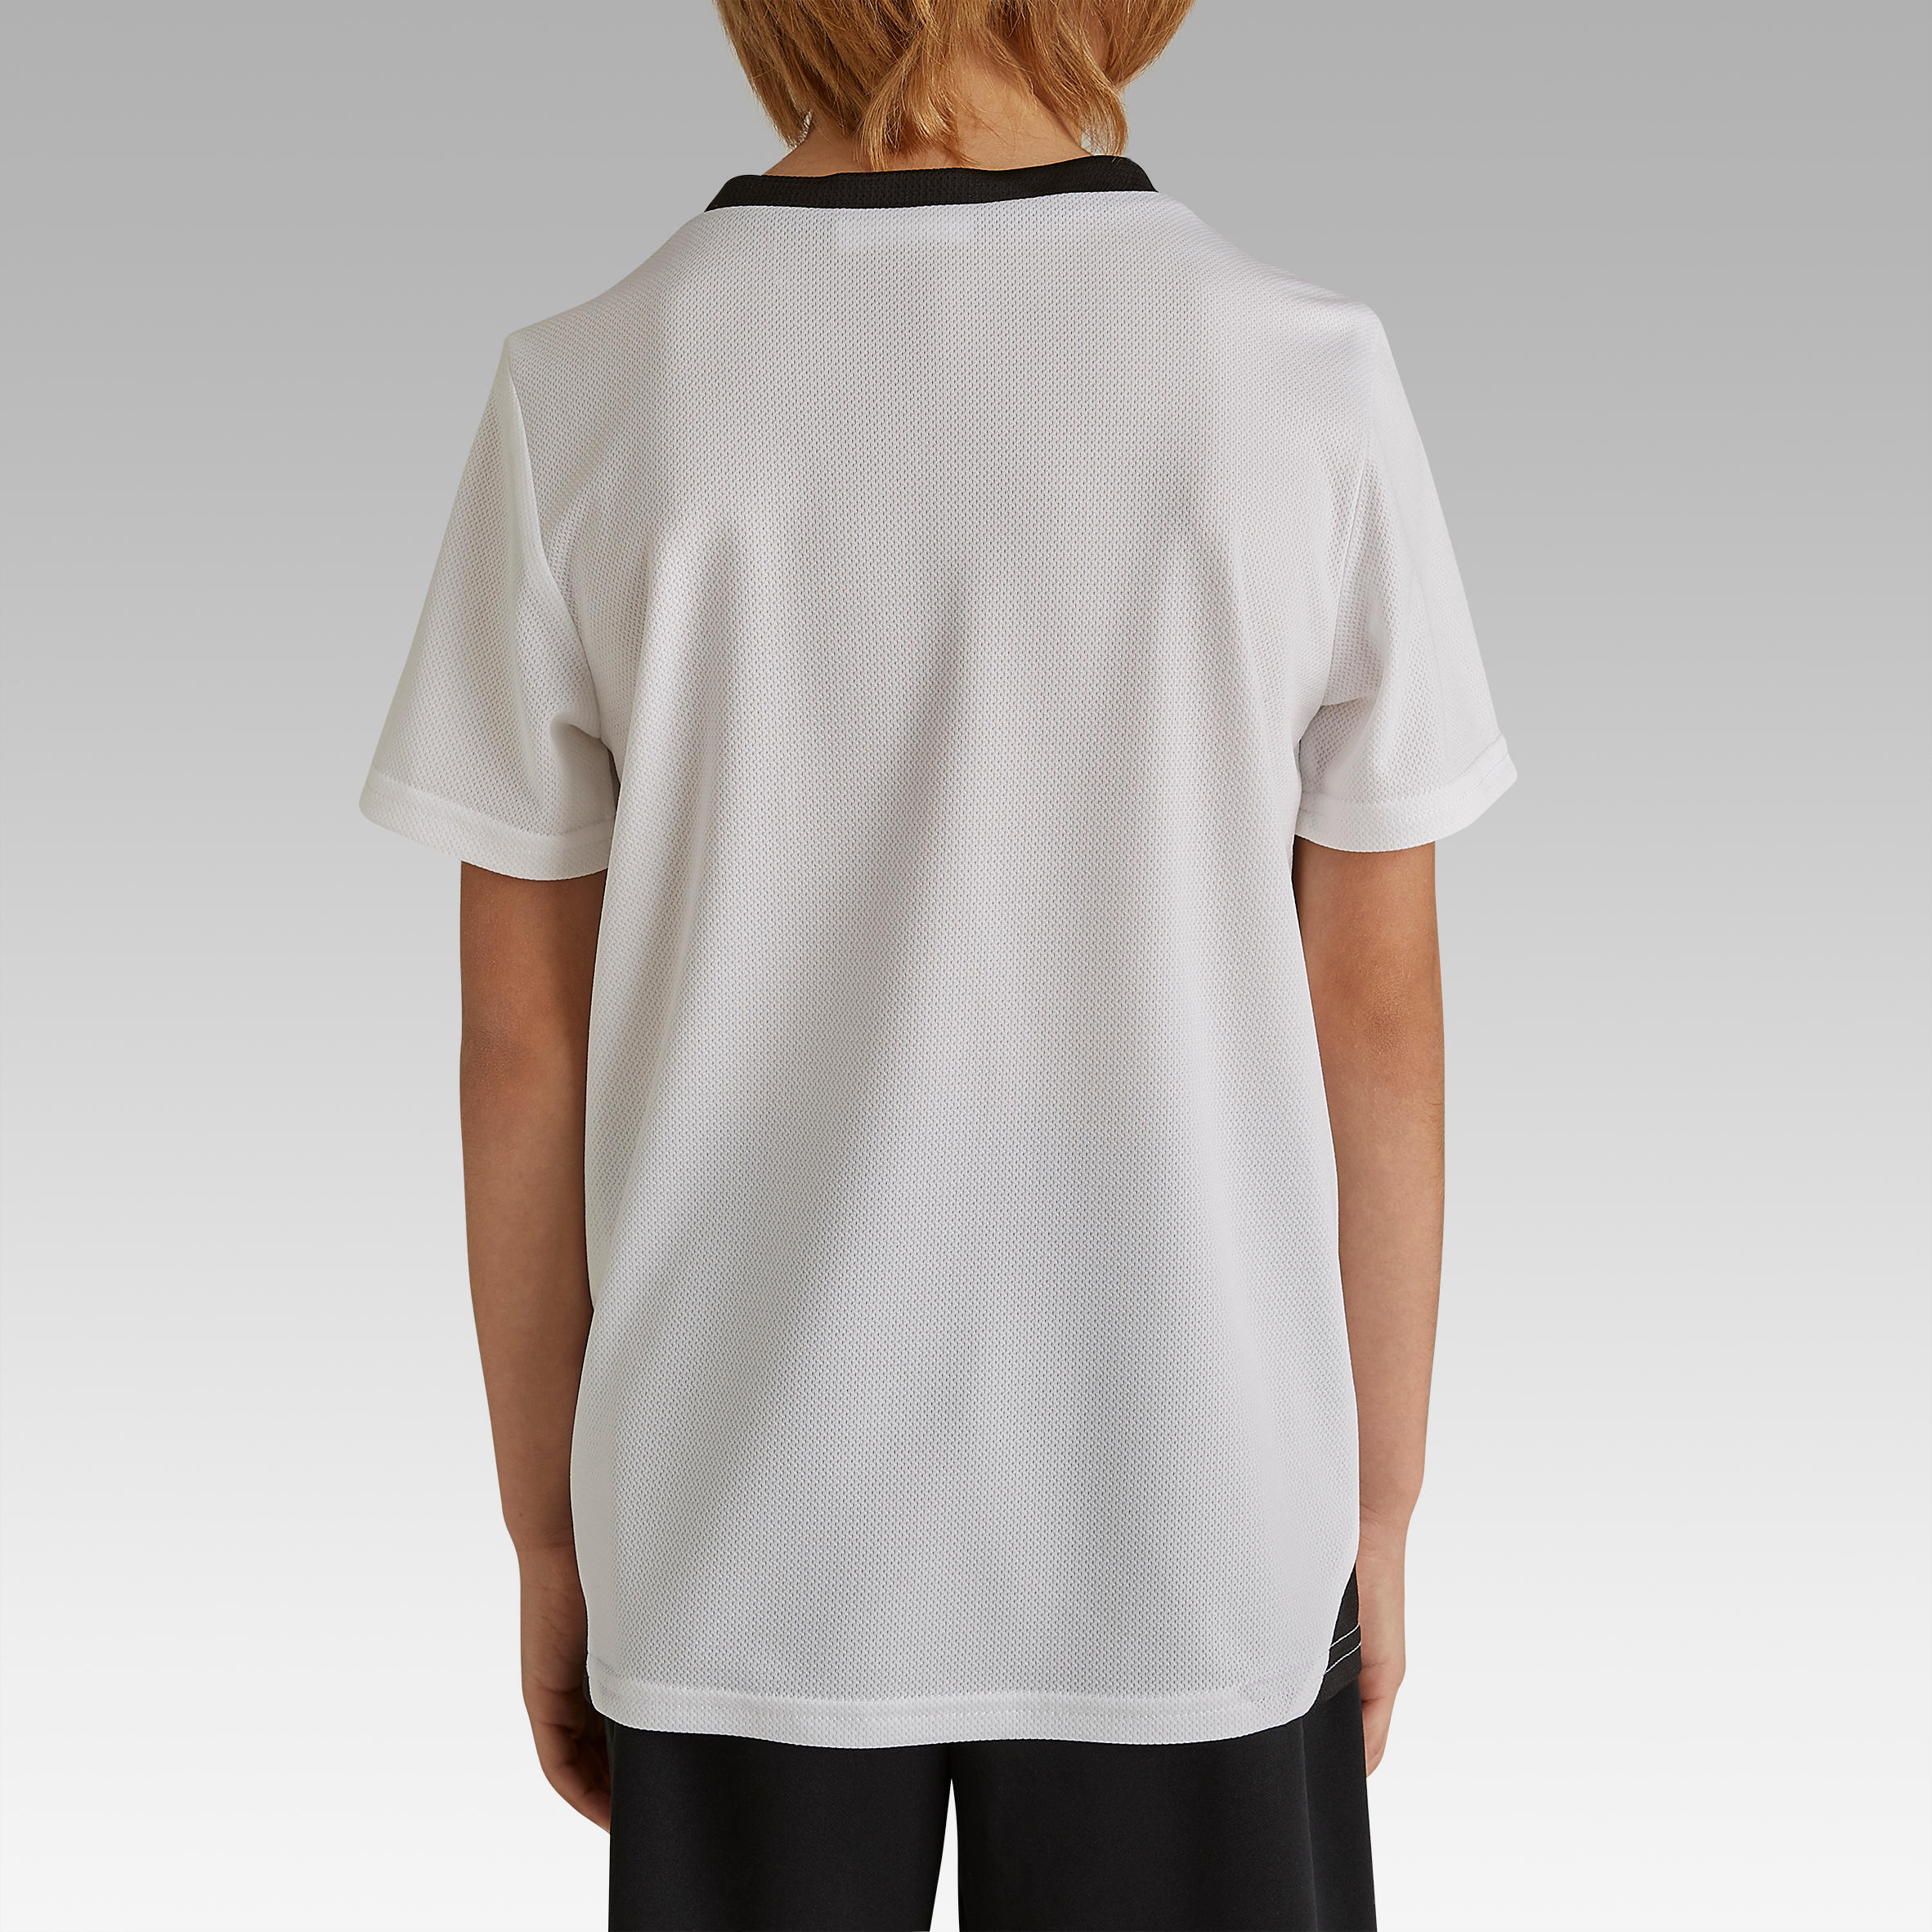 Kids' Football Shirt Essential - White 4/7